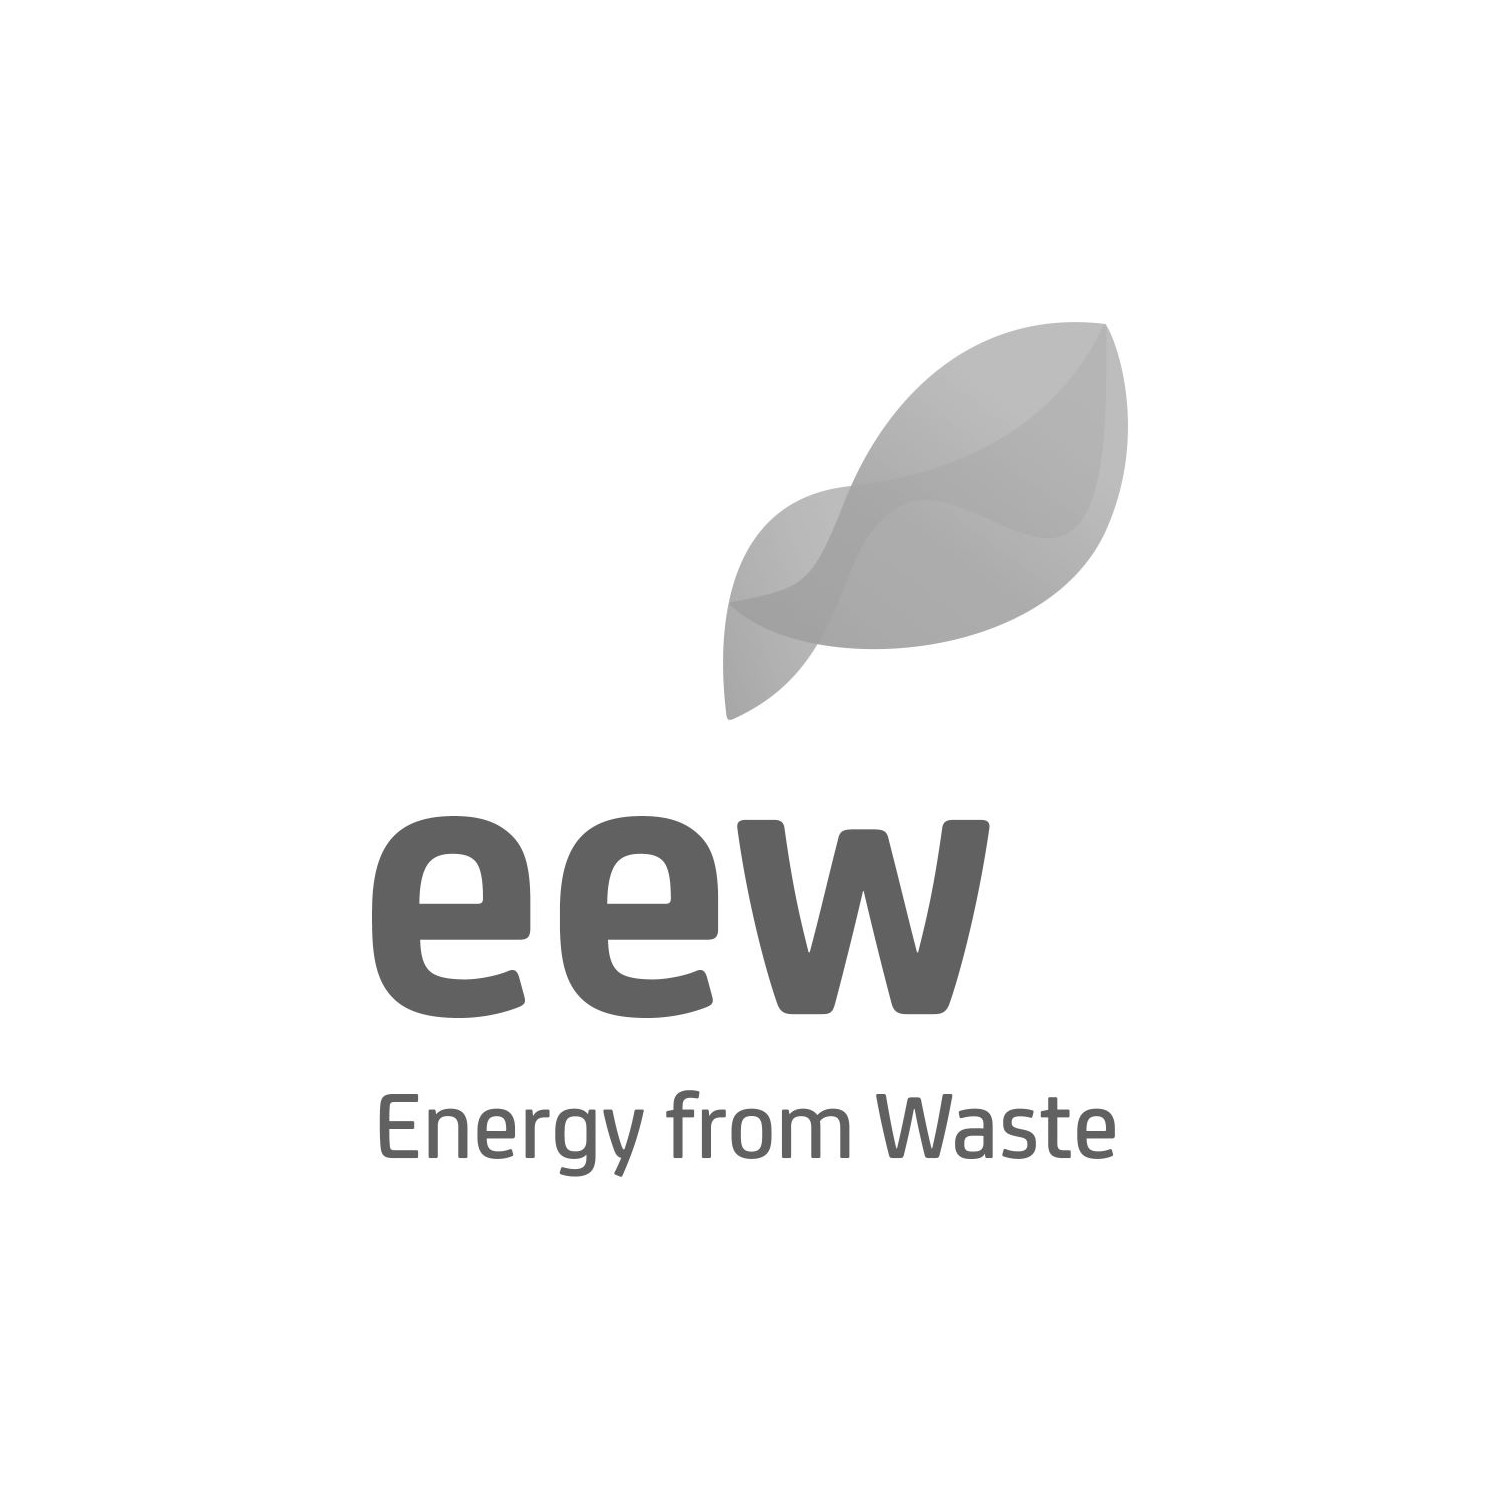 eew Logo, Energy from Waste